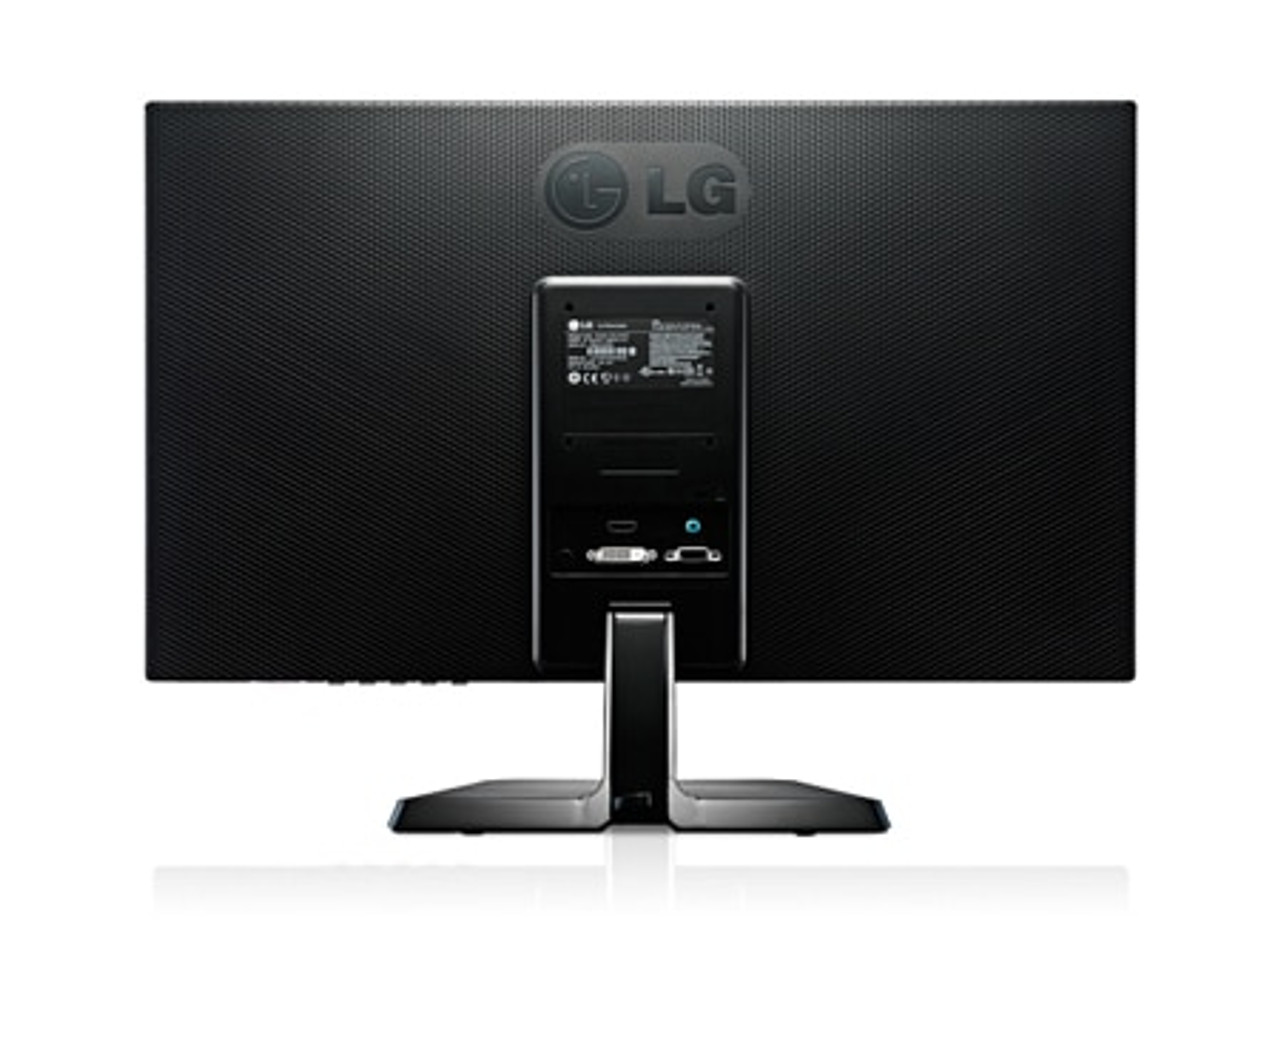 LG Flatron E2442V 24 Inch LED Monitor 1024 x 768